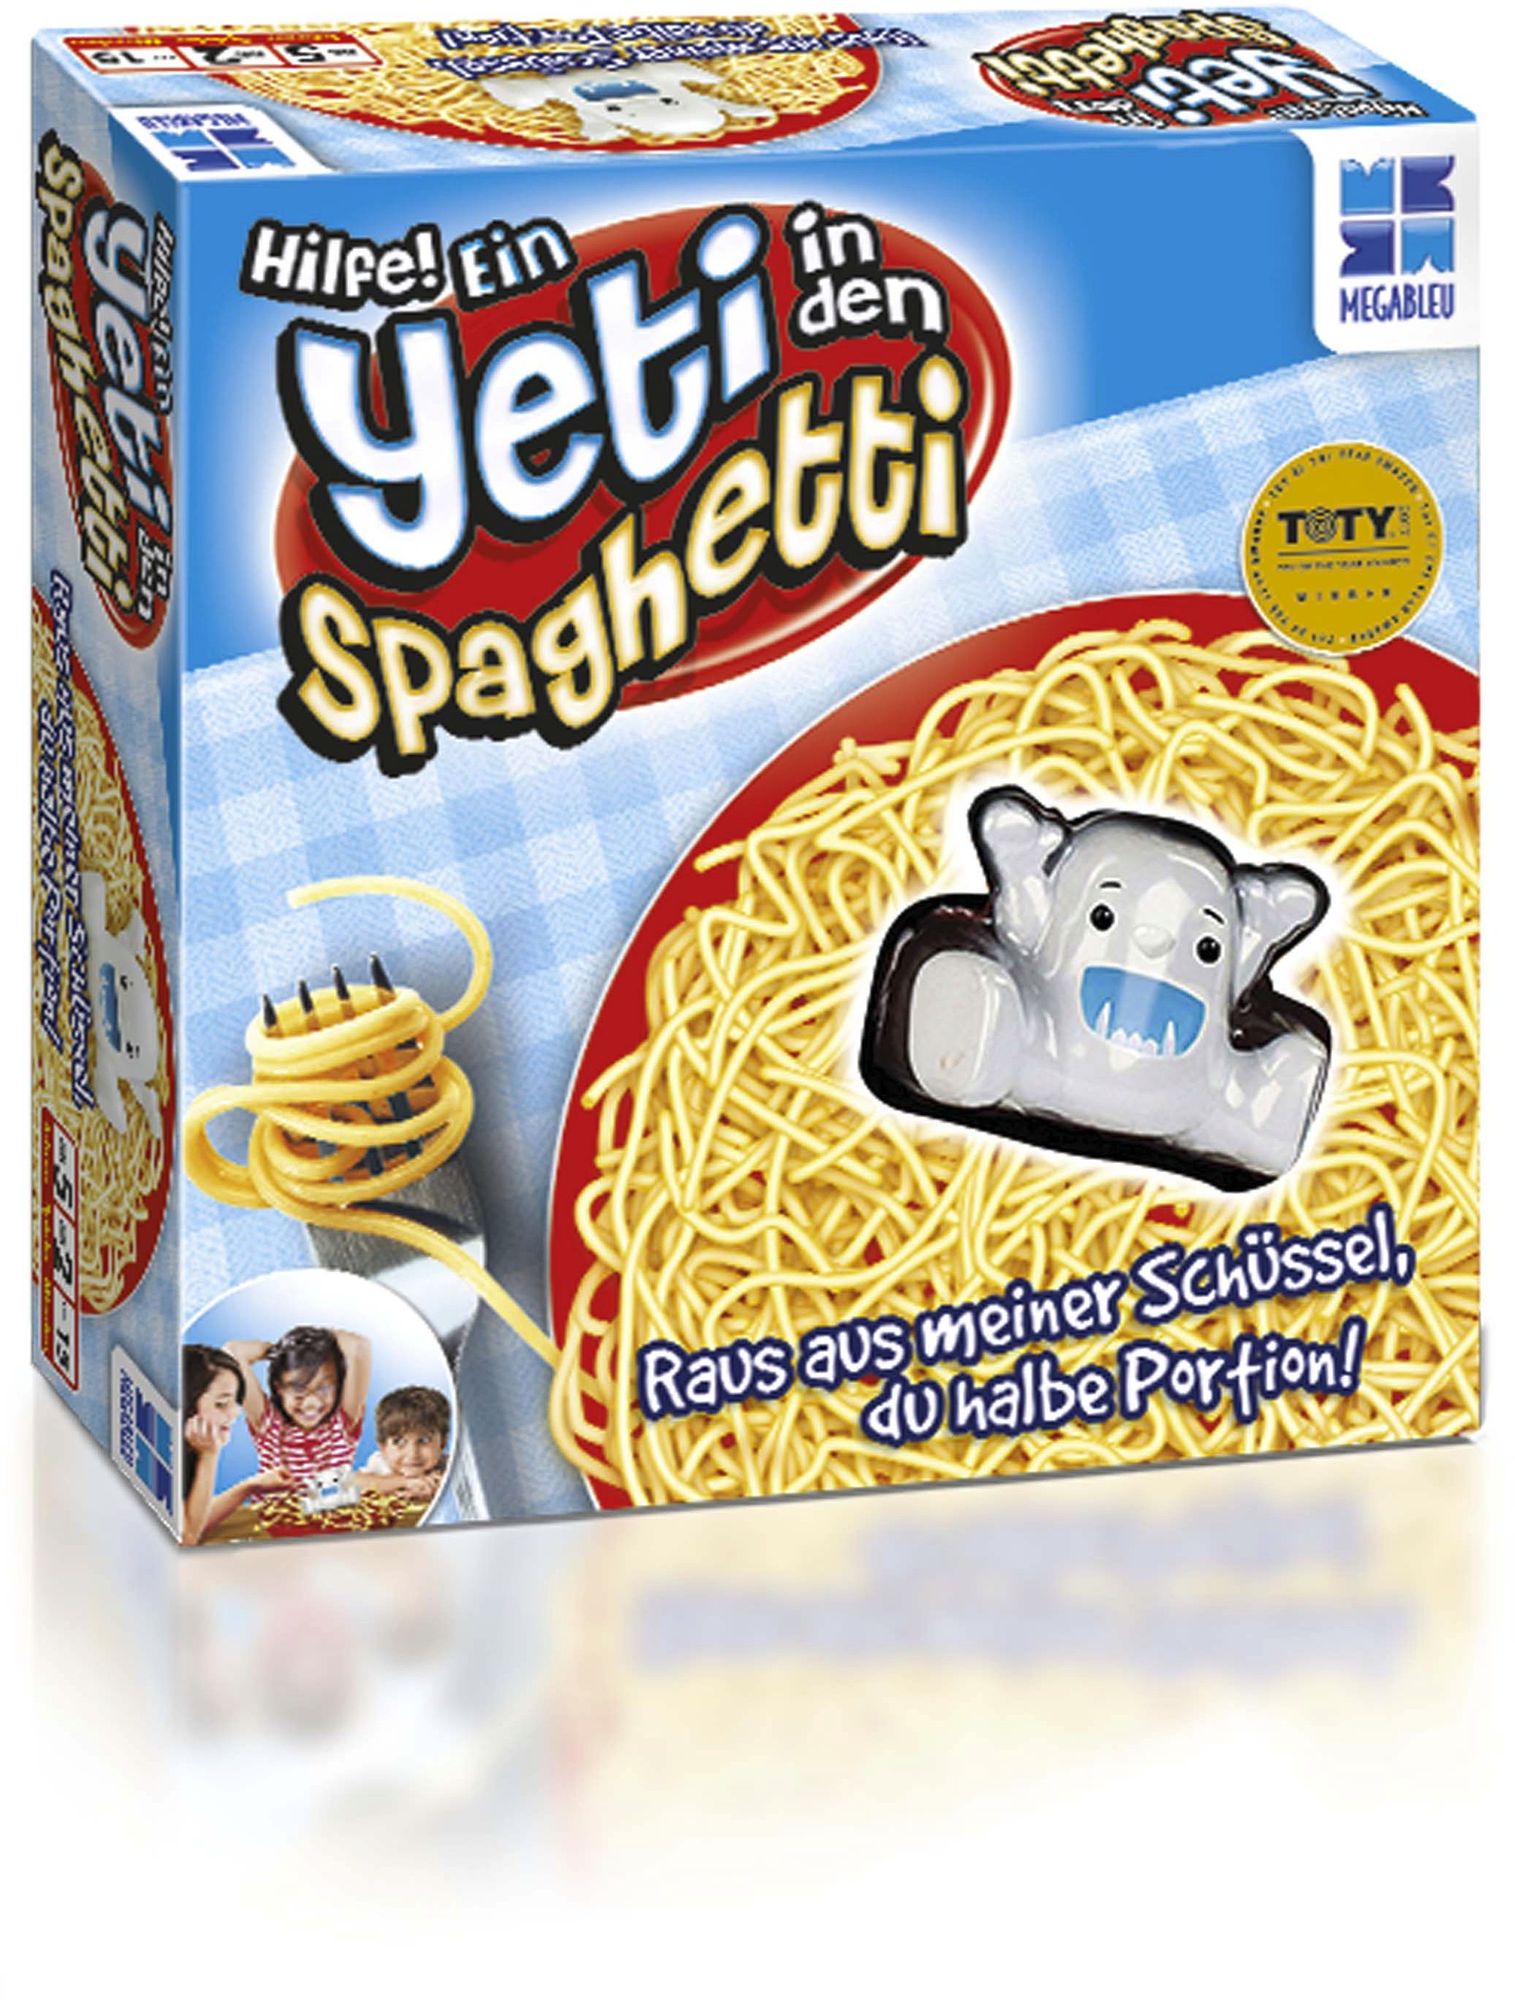 Hilfe ein Yeti in den Spaghetti von Megableu